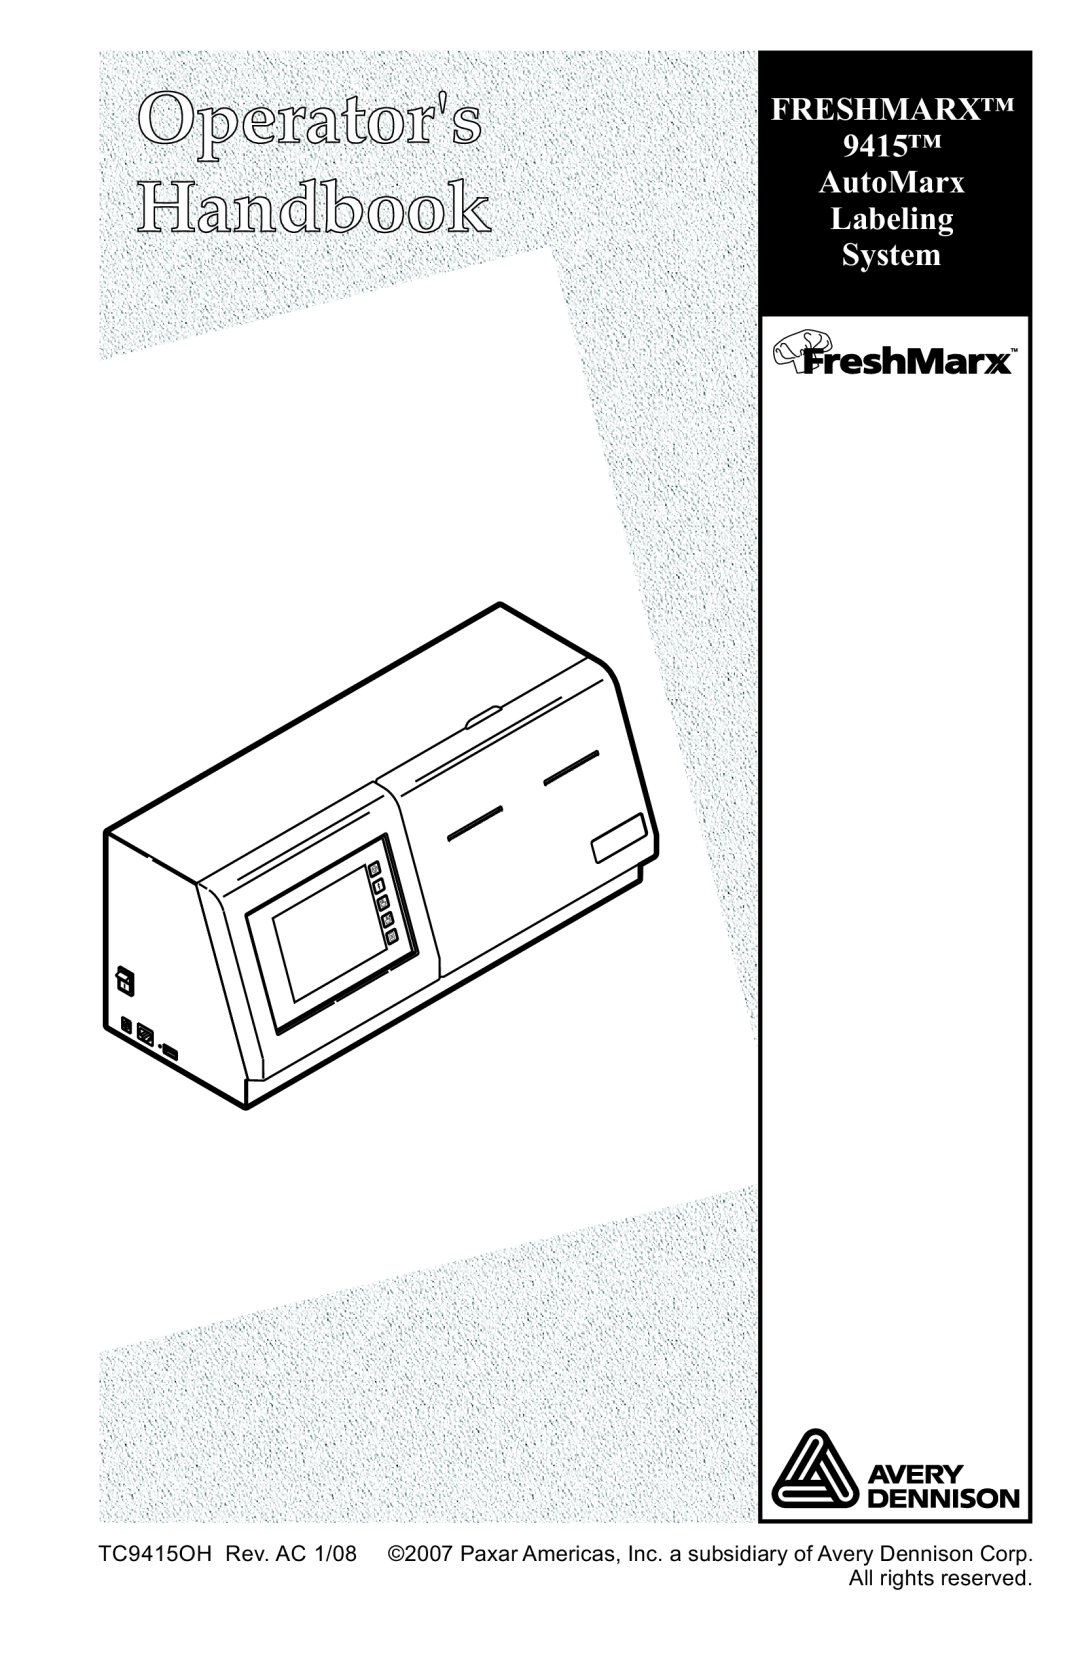 Paxar 9415 manual Operators Handbook, Freshmarx, AutoMarx, Labeling, System 